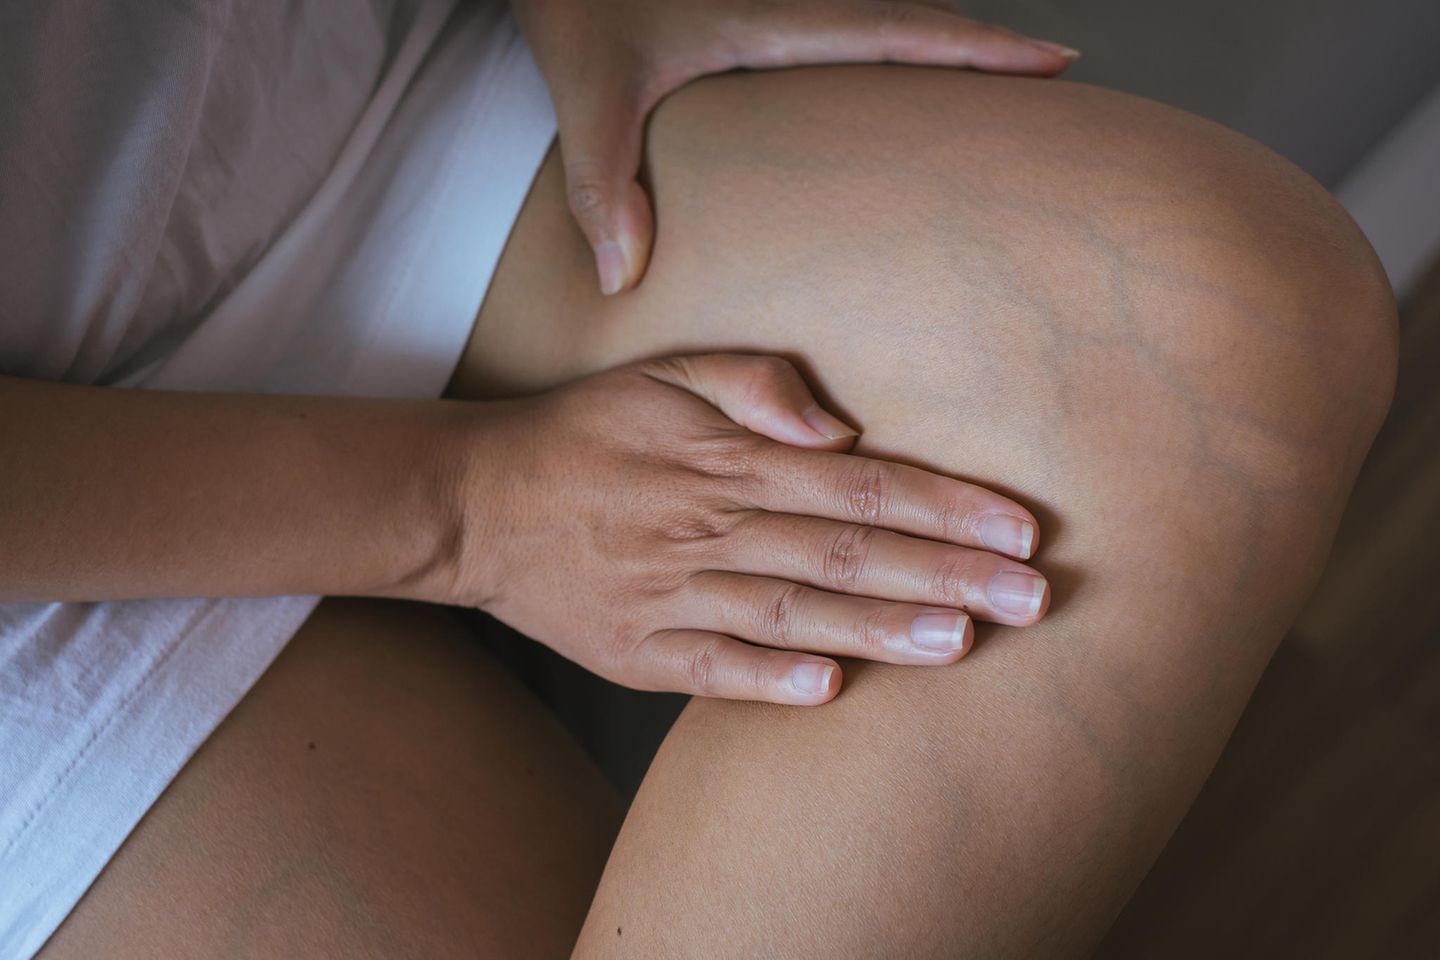 Hausmittel bei Venenentzündung: Frau fasst sich an Krampfadern am Bein